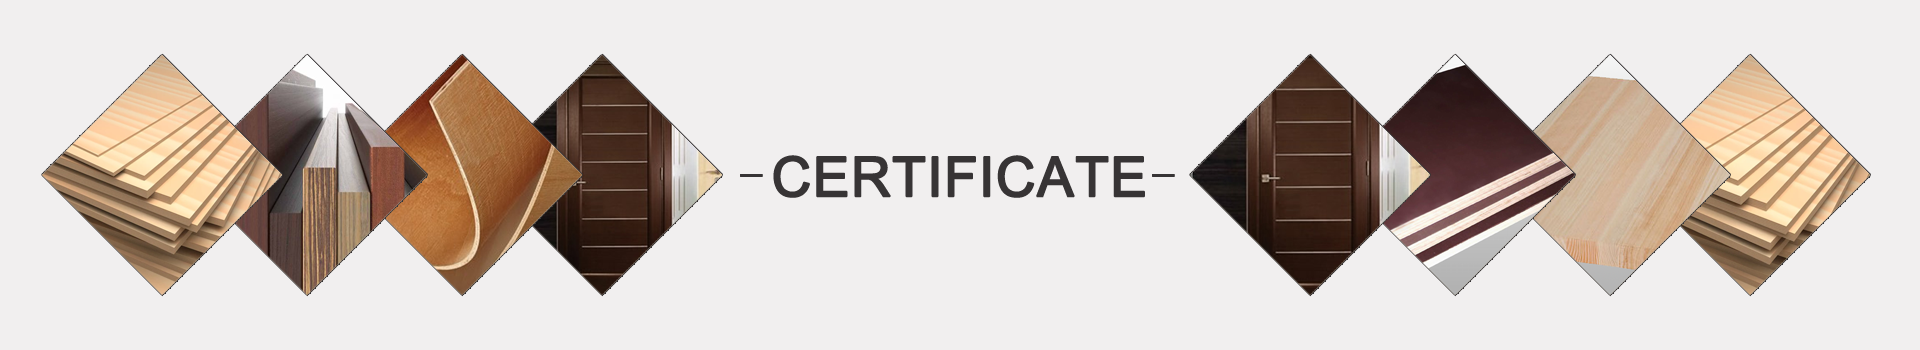 Archerply Certificates